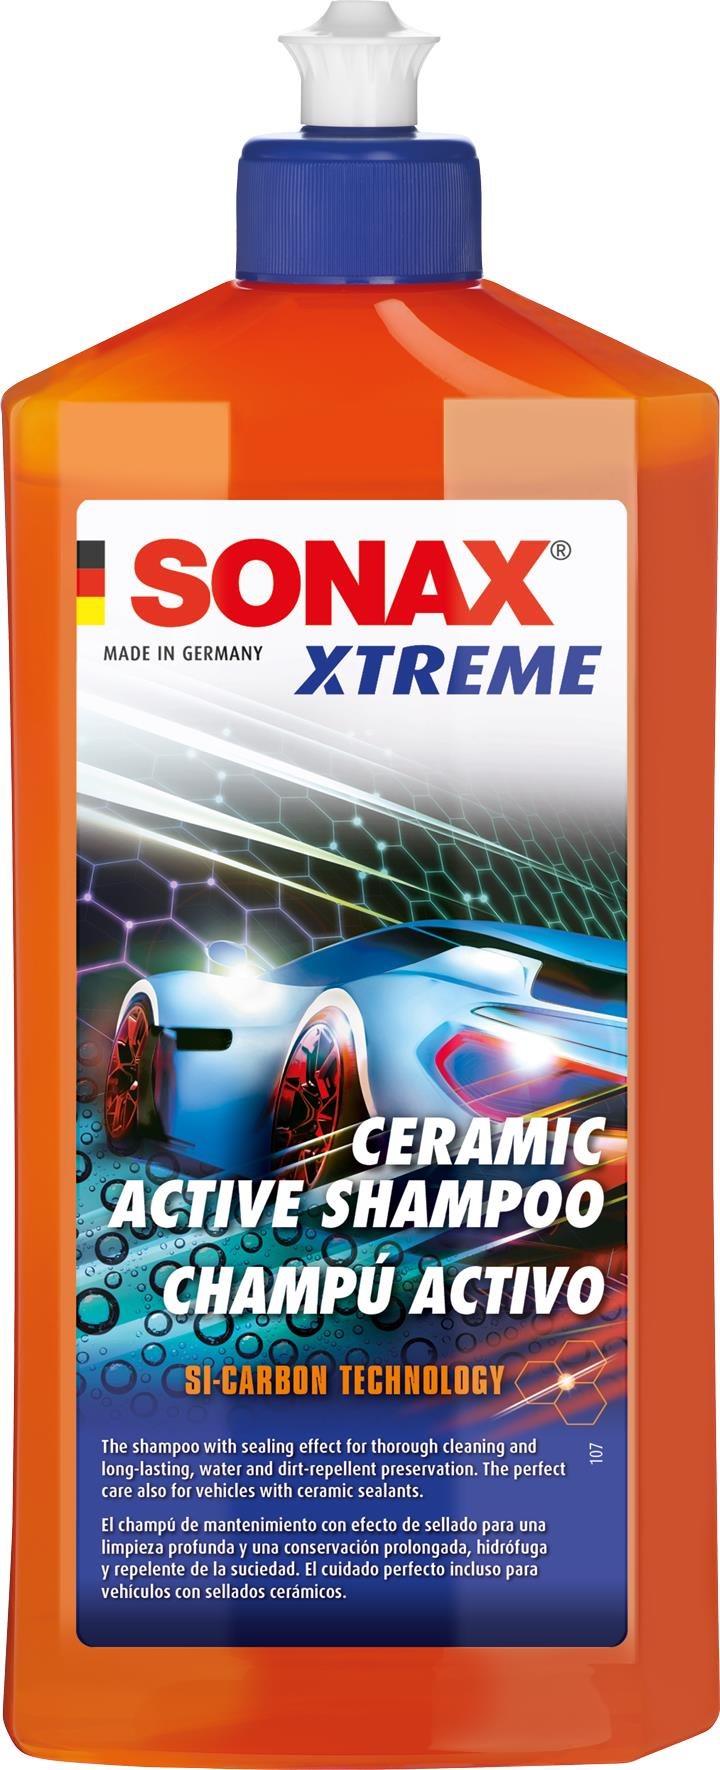 Sonax Extreme Ceramic Active Shampoo